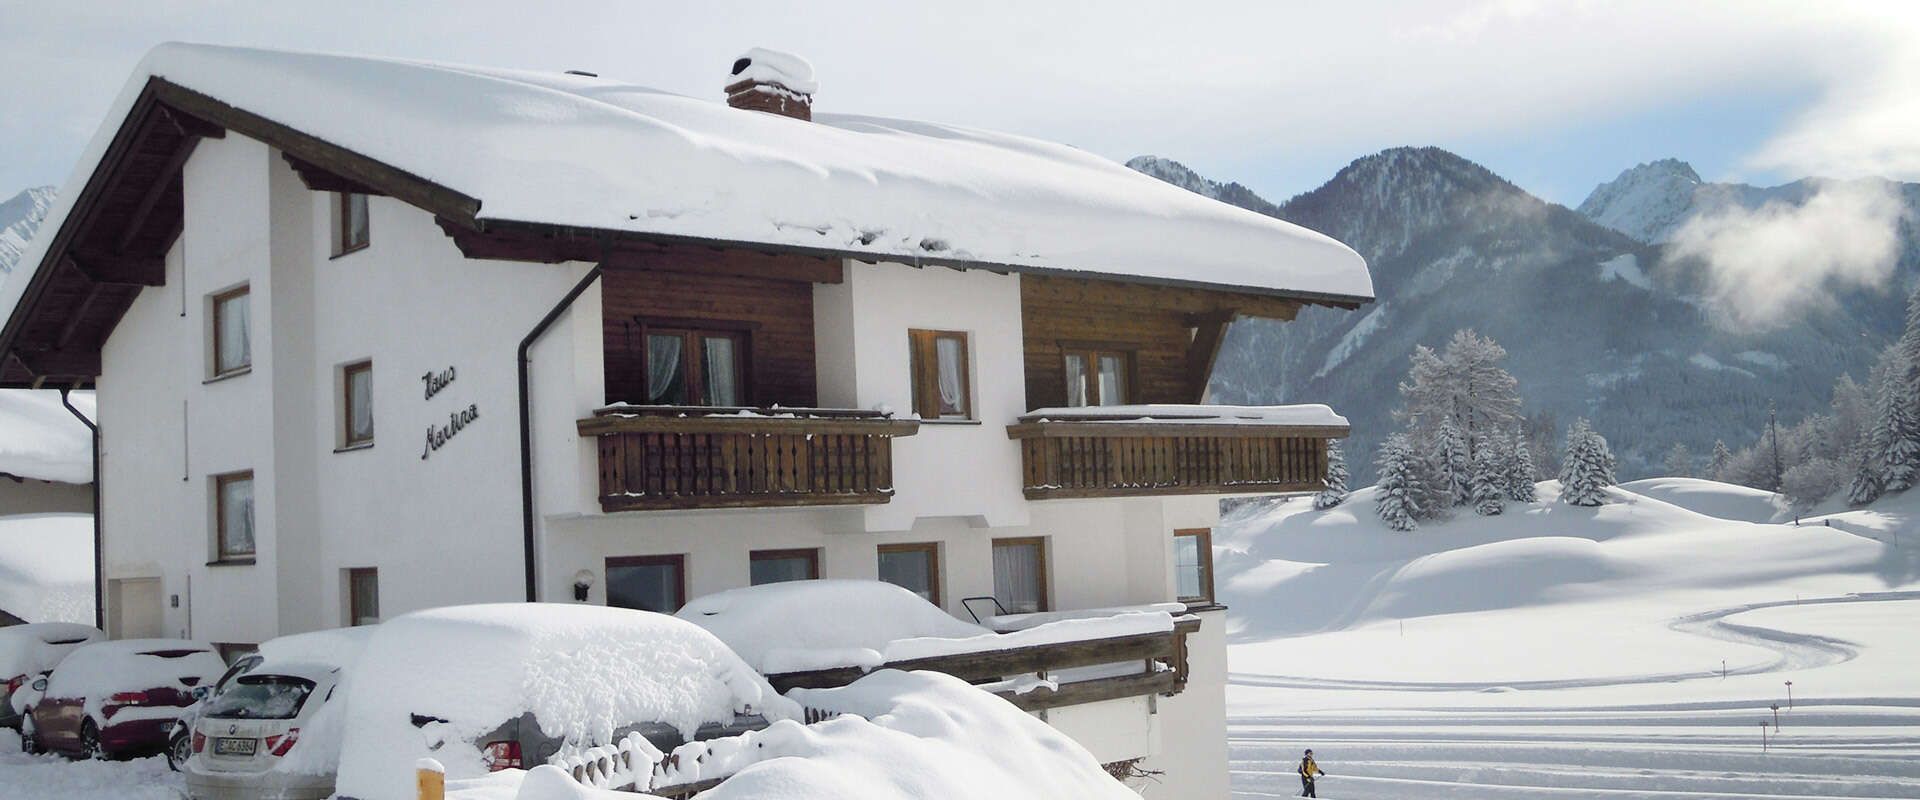 Haus Martina in Serfaus Tyrol in winter